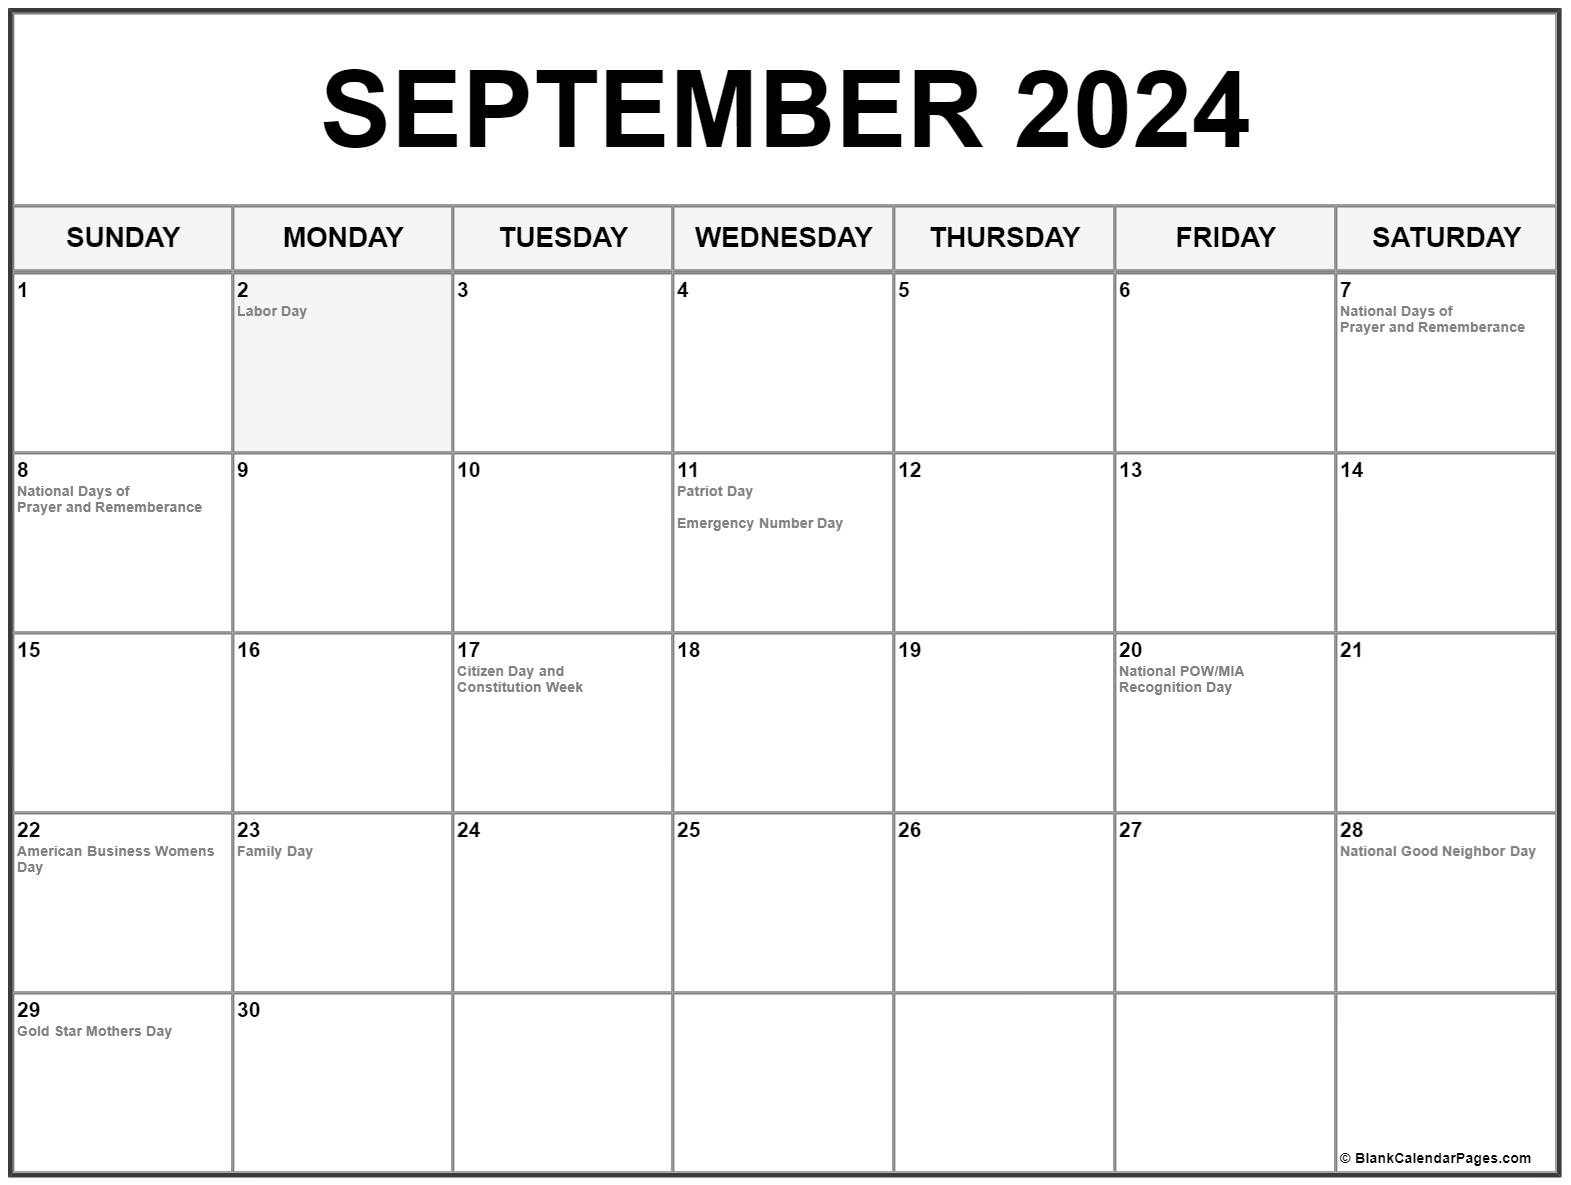 Free September 2024 Printable Calendar 2024 CALENDAR PRINTABLE - Free Printable 2024 Calendar September 24calendars